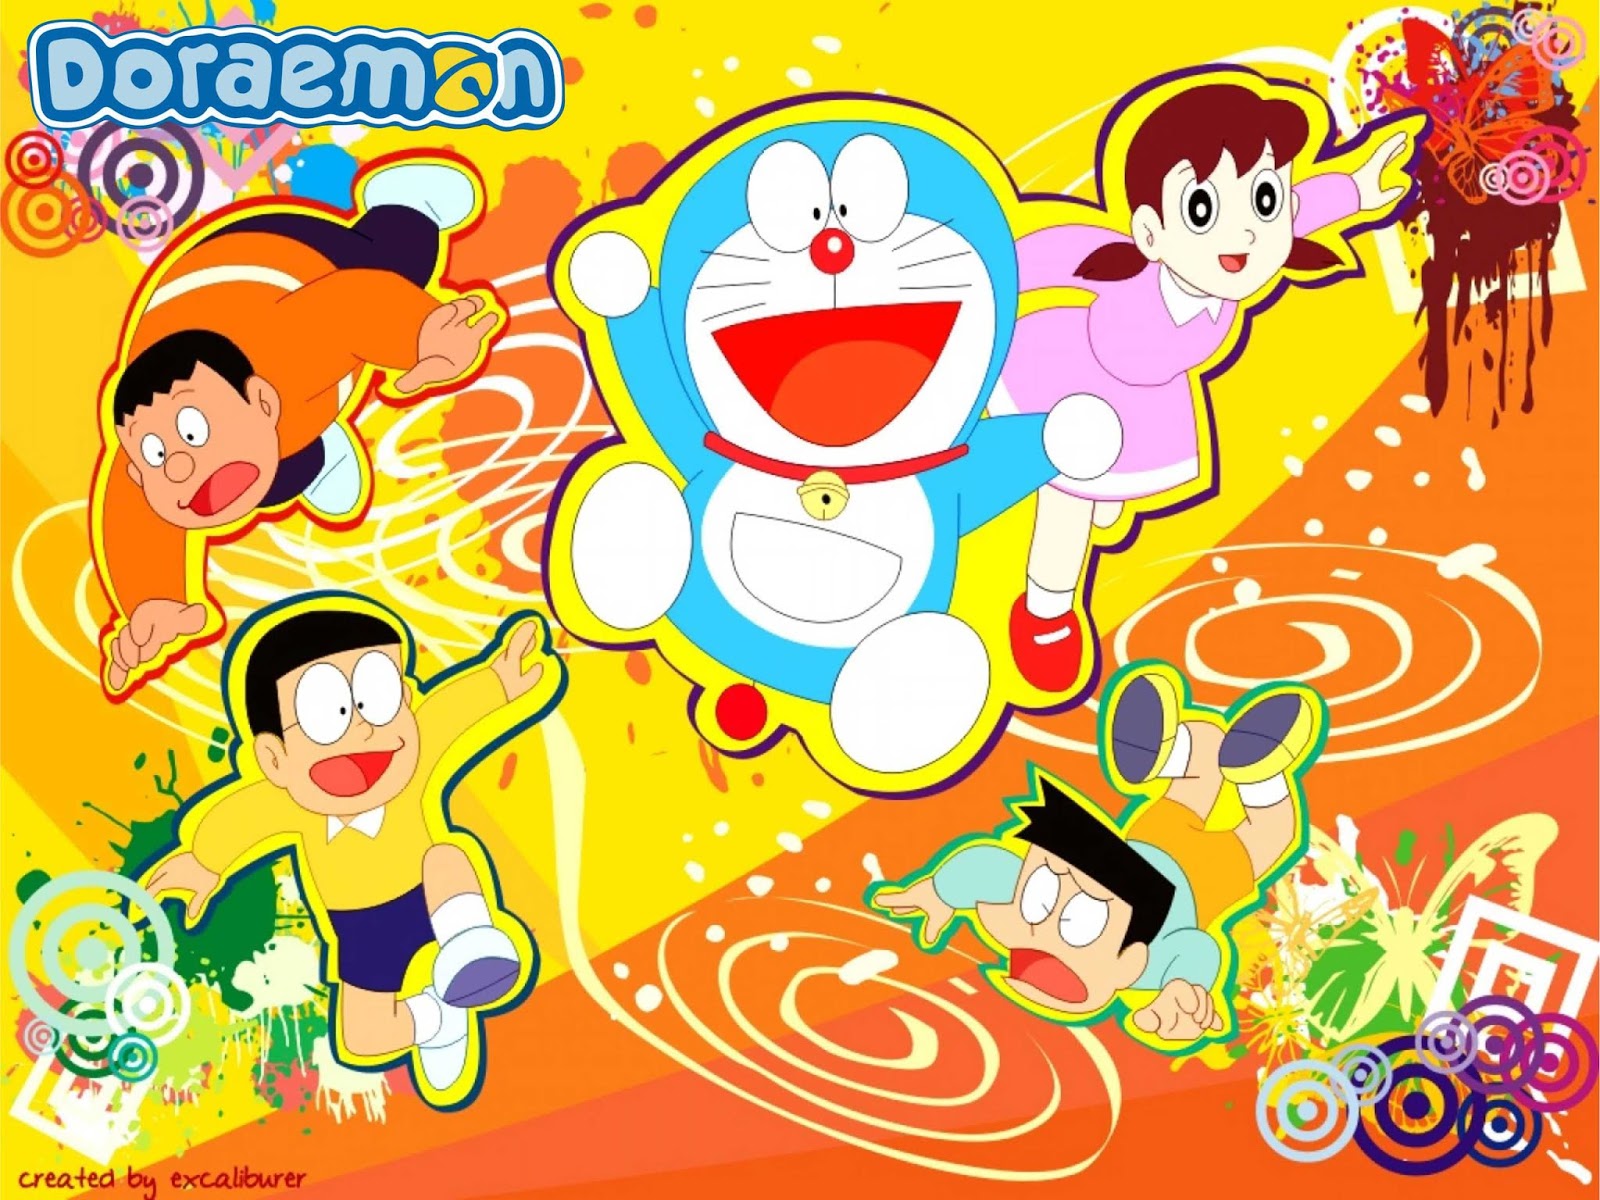 54 Gambar Kartun Doraemon Lucu Dan Imut Terbaru 2020 Gambar Lucu